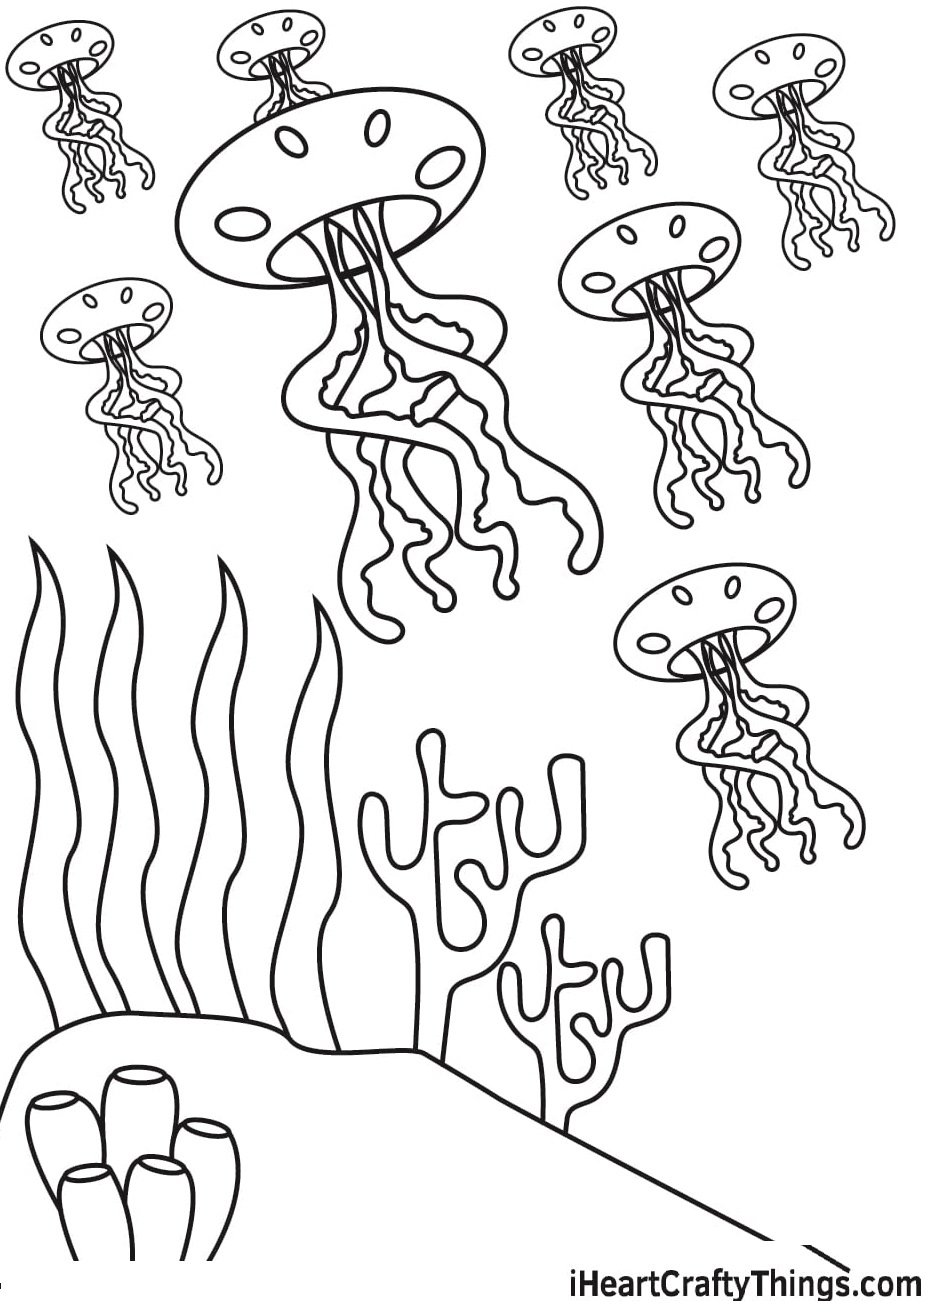 Box Jellyfish Image Coloring Page